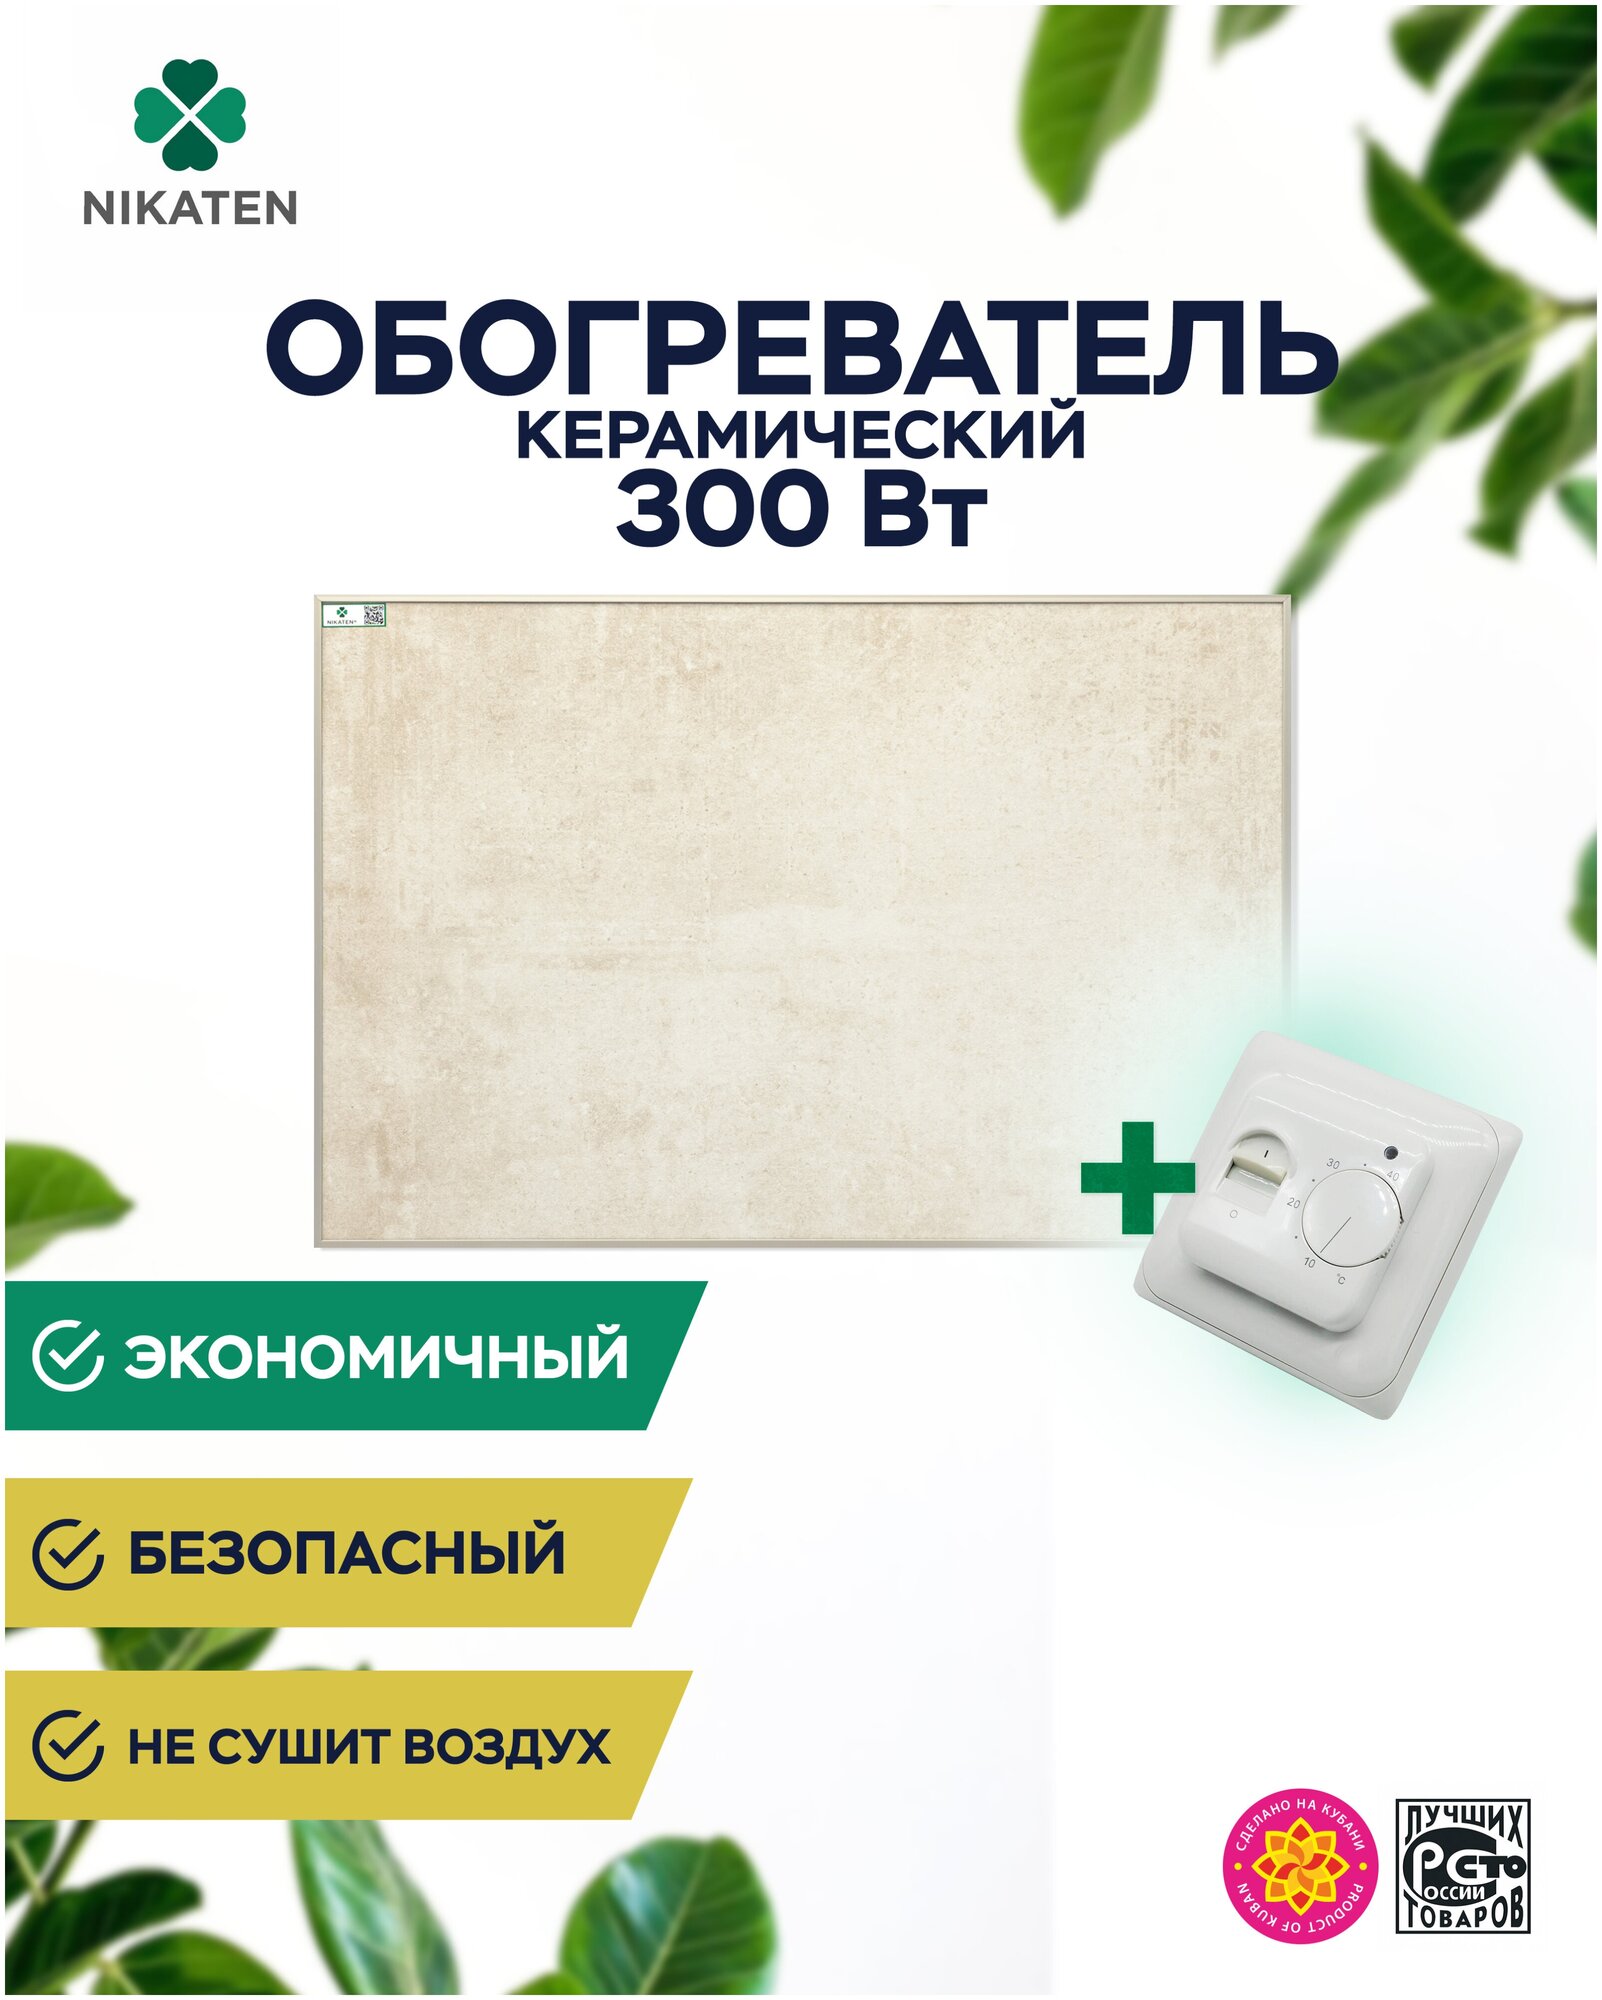 Обогреватель Nikaten 300Вт + термореглятор 70.16